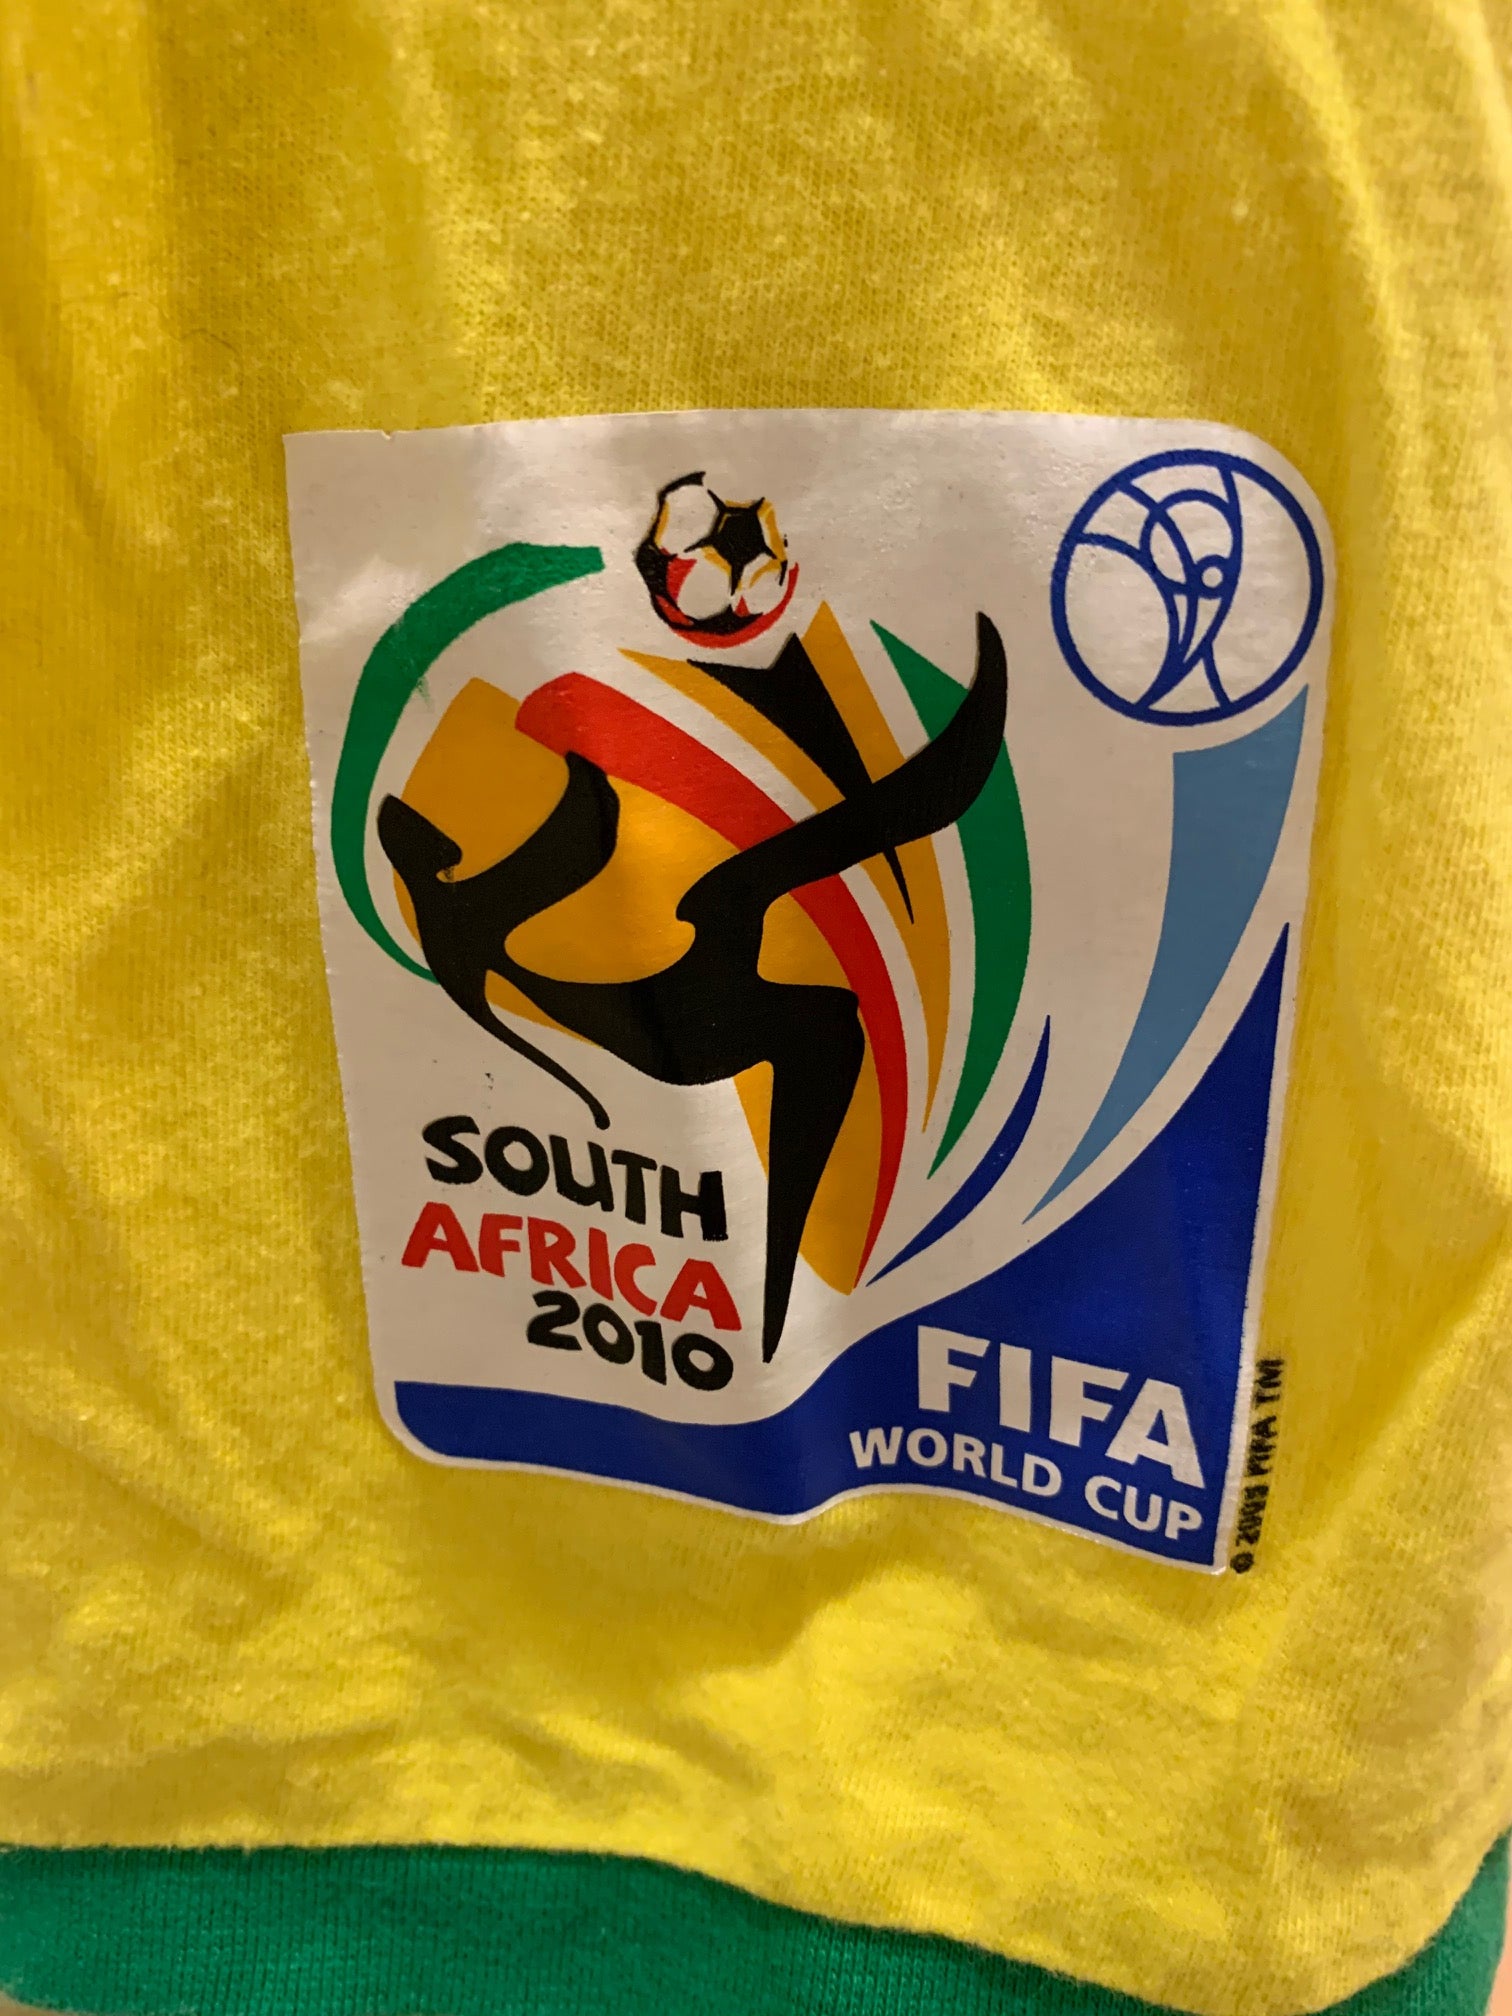 Brasil 2010 FIFA World Cup Tee Shirt - XL